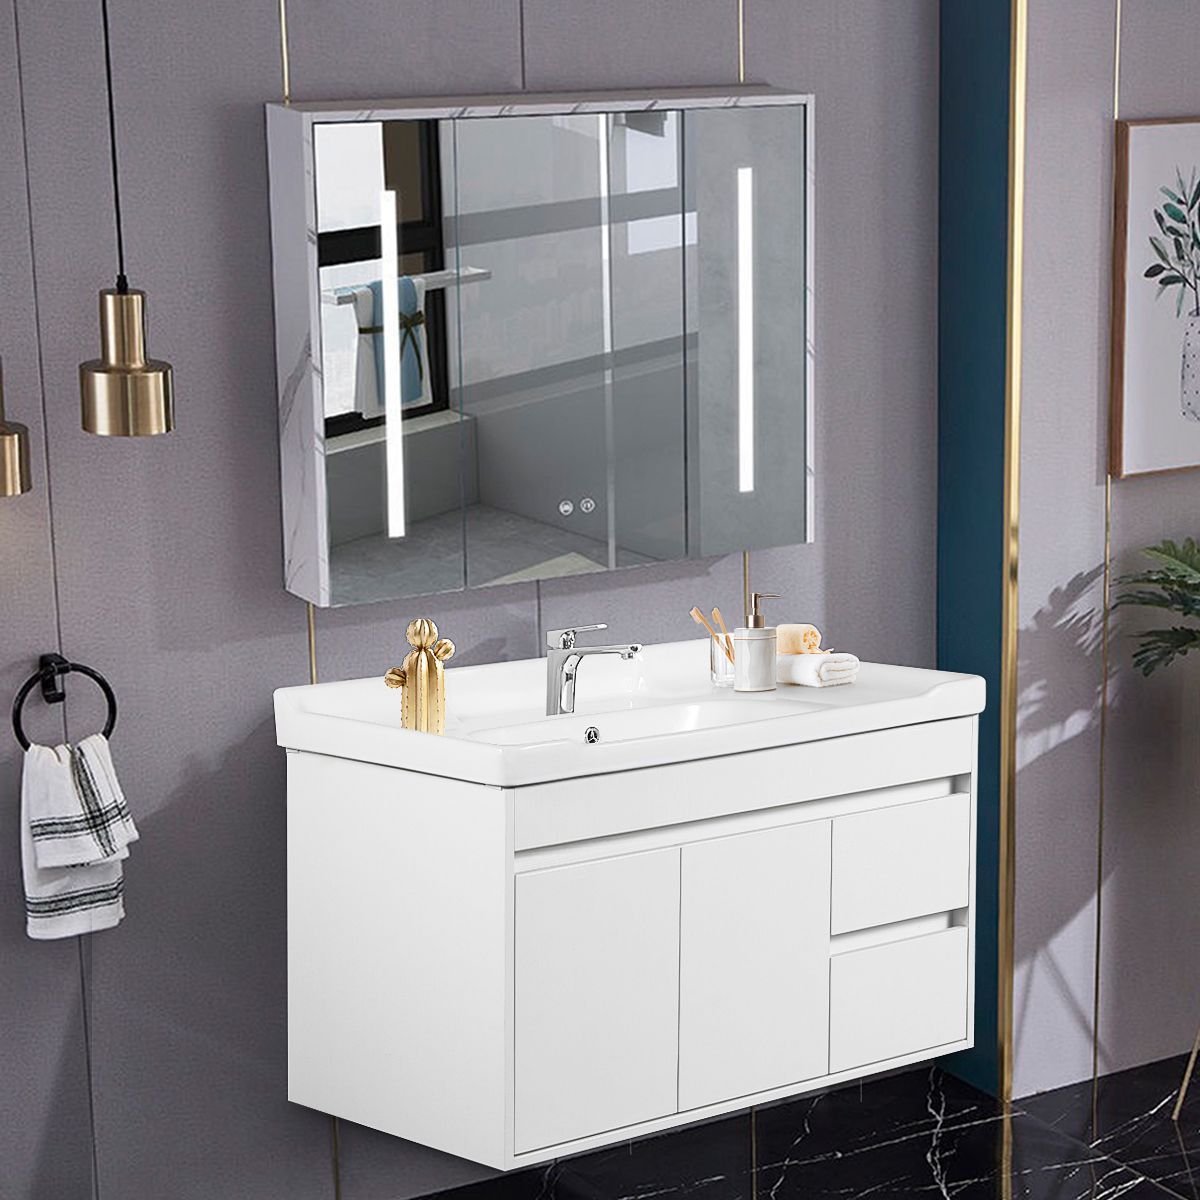 90cm Bathroom Vanity Wall Cabinet Sink Basin Cupboard Storage Unit ...